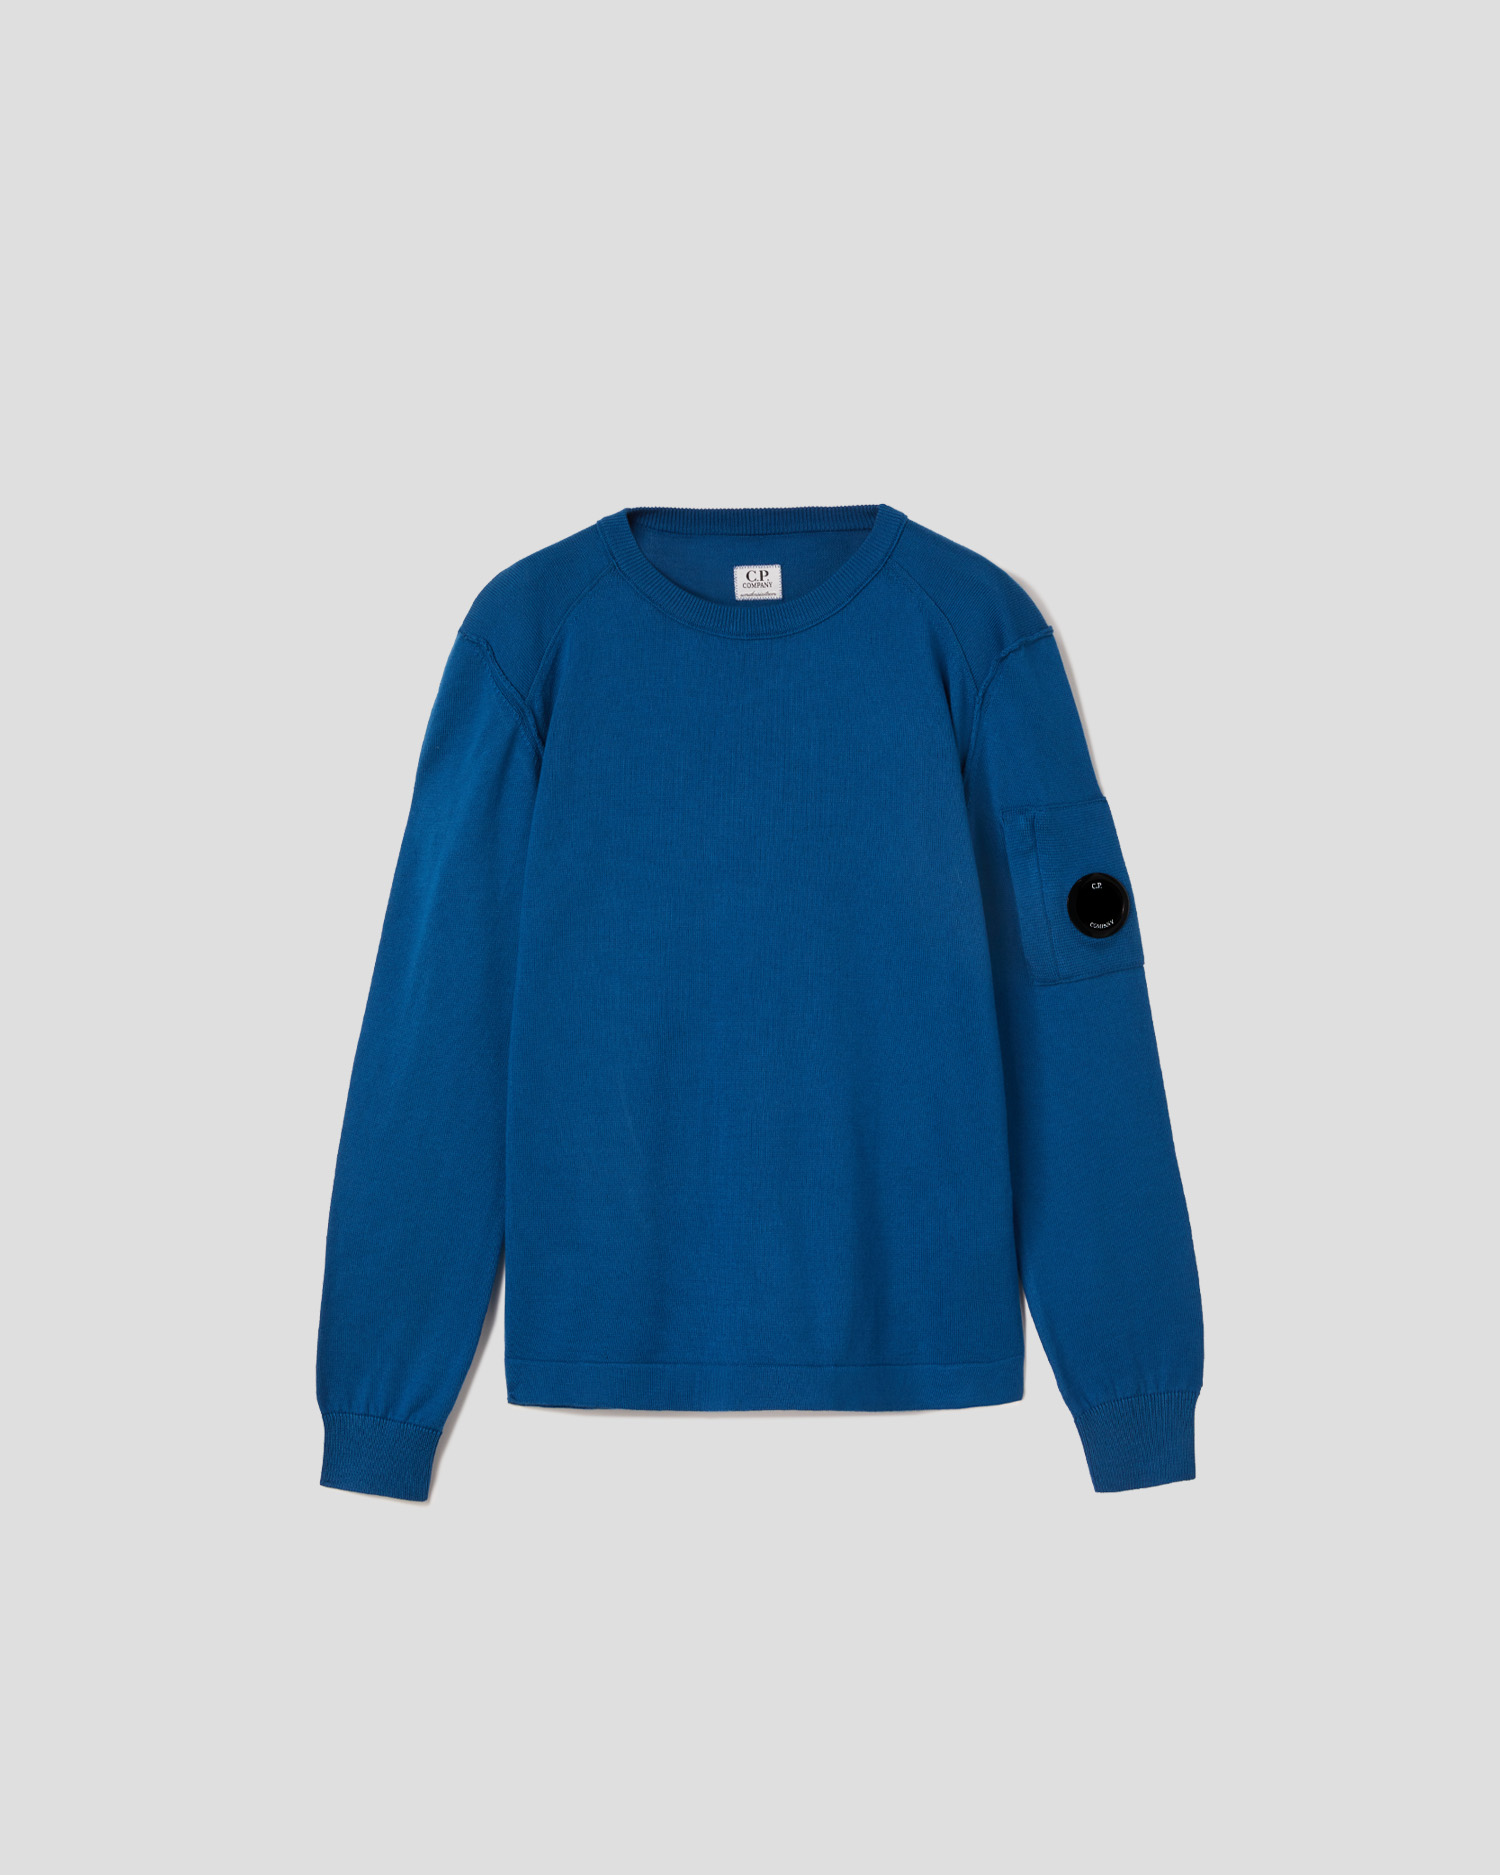 Sea Island Crew Neck Sweater | C.P. Company Online Store